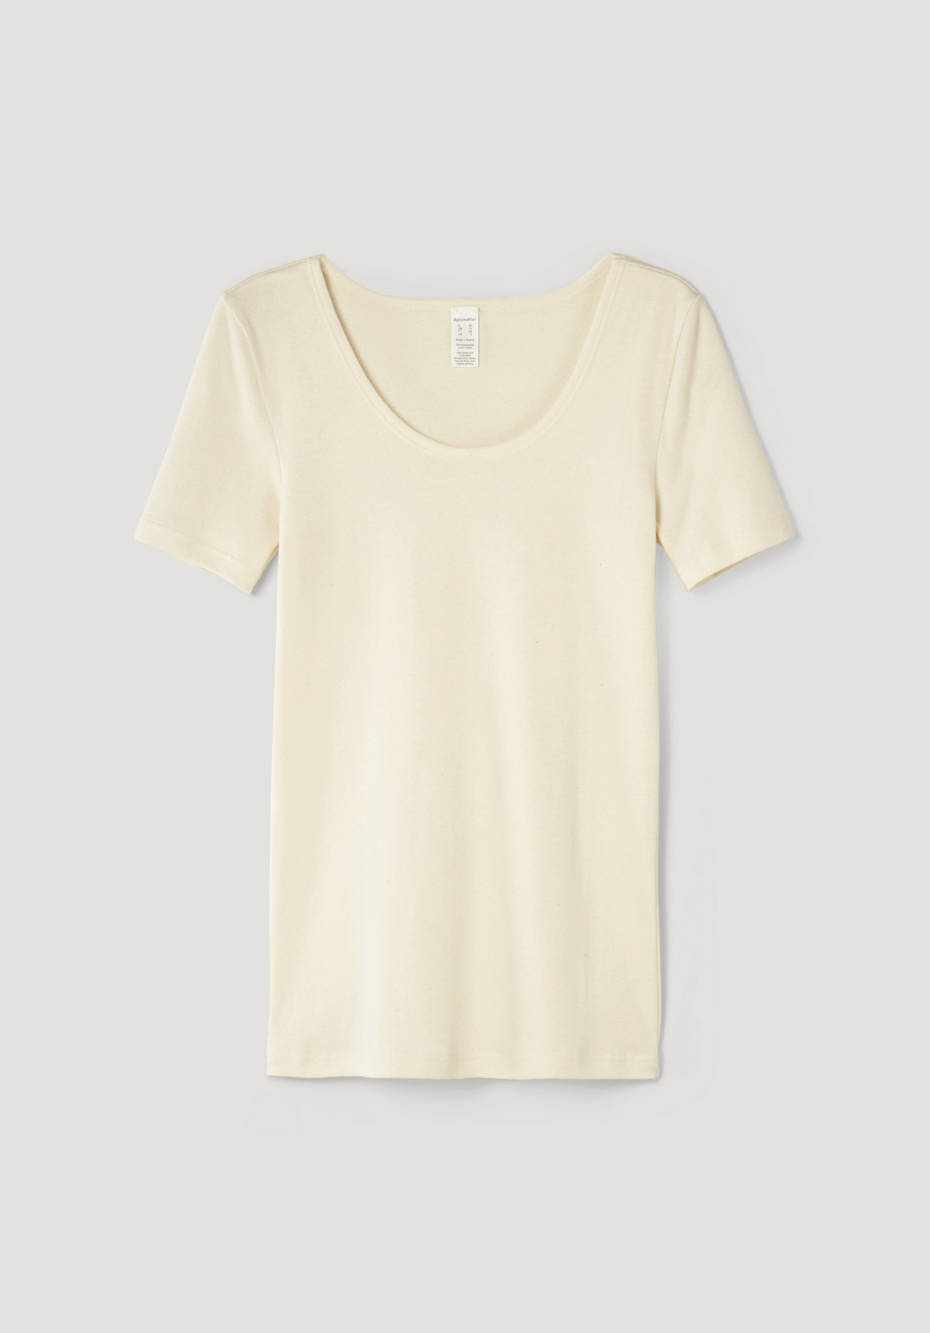 T-shirt ModernNATURE made of pure organic cotton